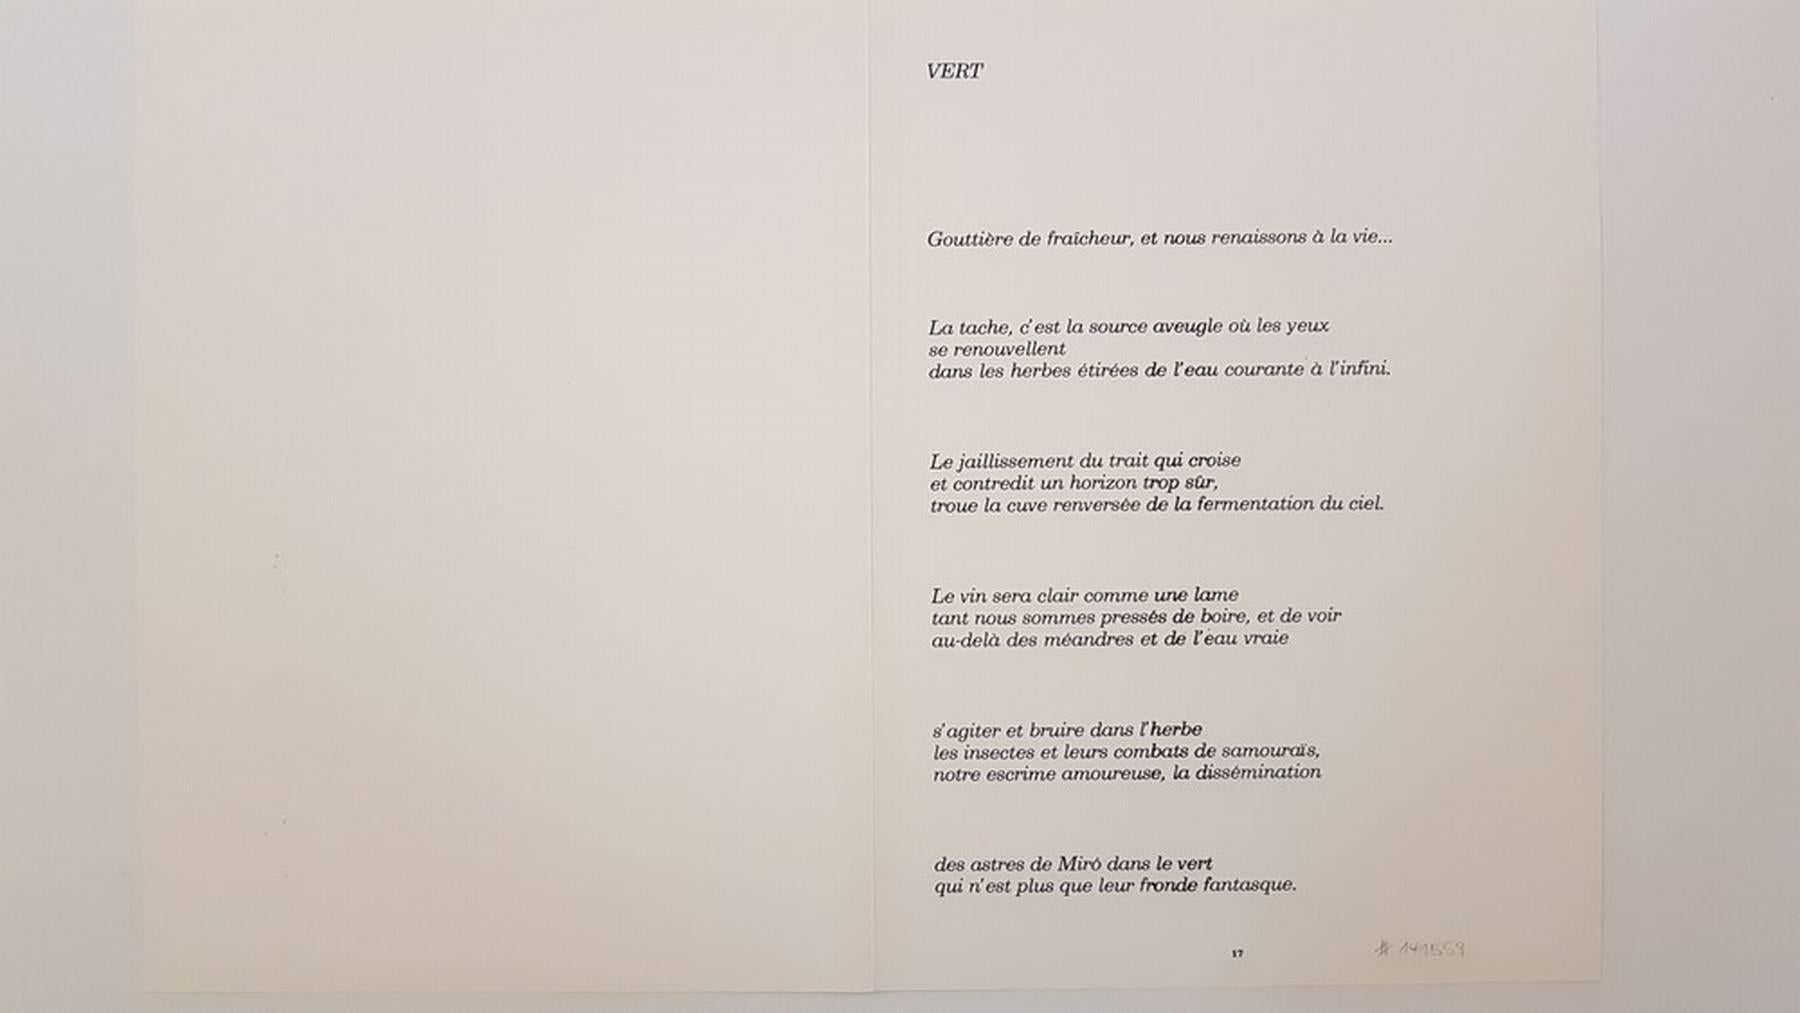 Catalogue Raisonné: Cramer 145
Color Lithograph, Year: 1973, Publisher: Maeght Editeur Paris
Condition: Centerfold, in good condition
Size: 21.6 × 14.8 inches, Unframed

Joan Miró i Ferrà (1893 – 1983) was a Spanish painter, sculptor, and ceramicist